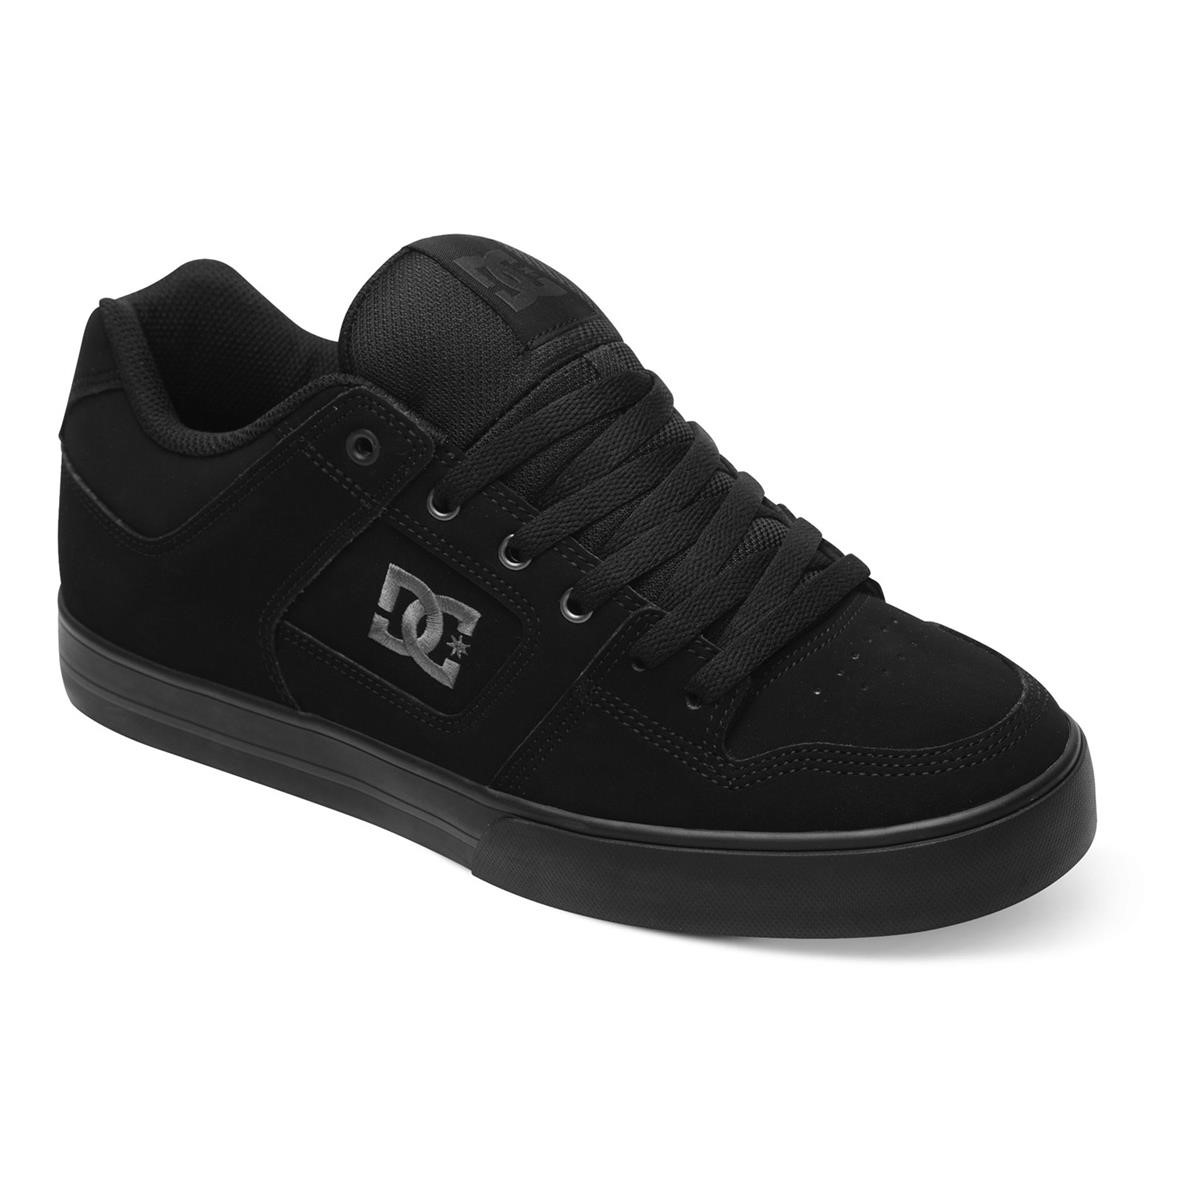 DC Shoes Pure Black/Pirate Black